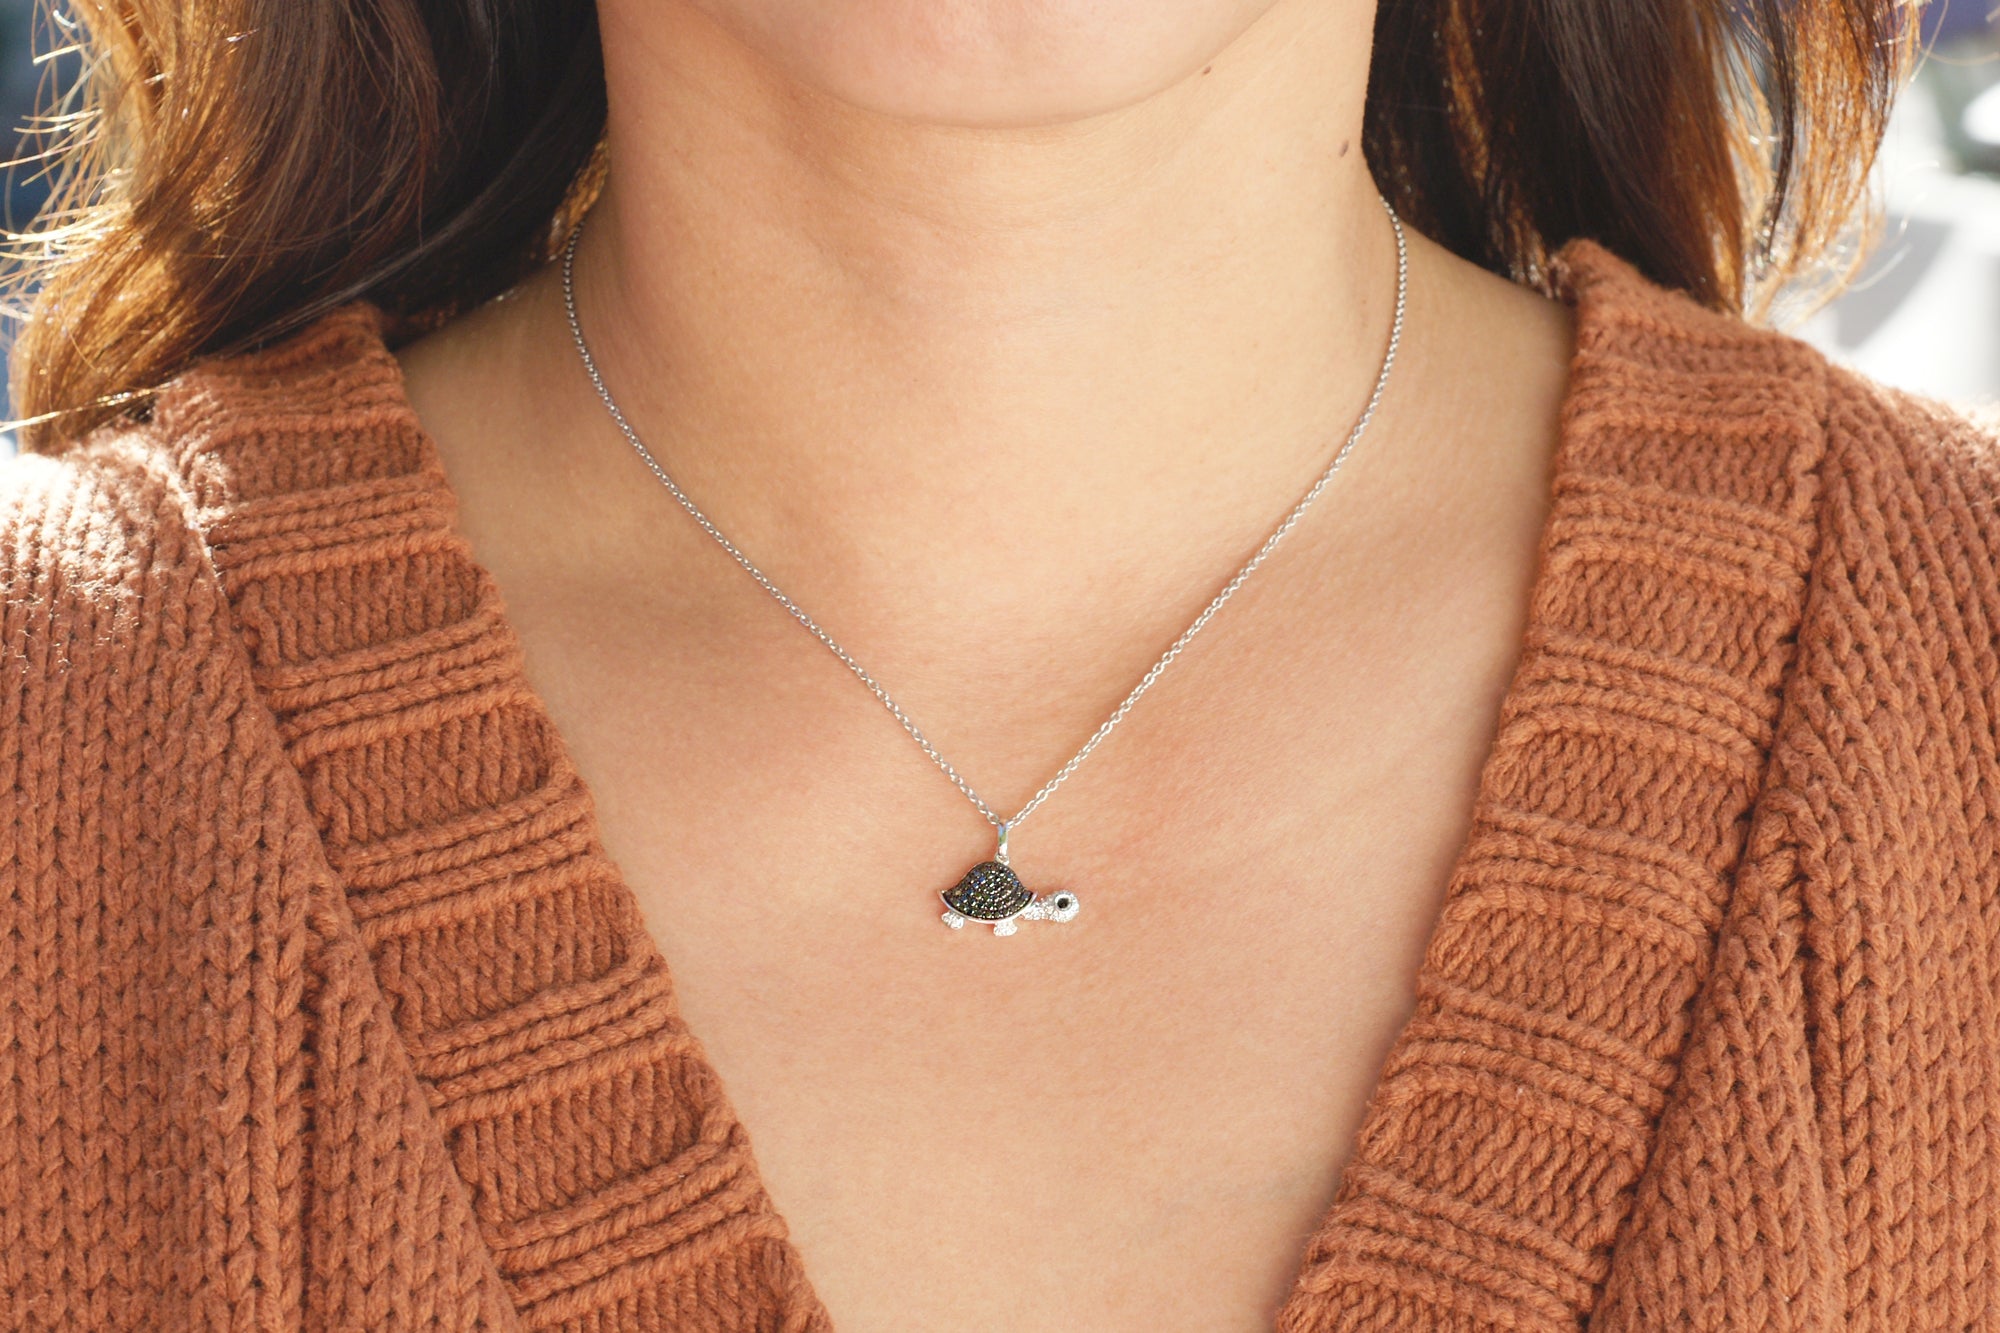 Black diamond turtle necklace on a model